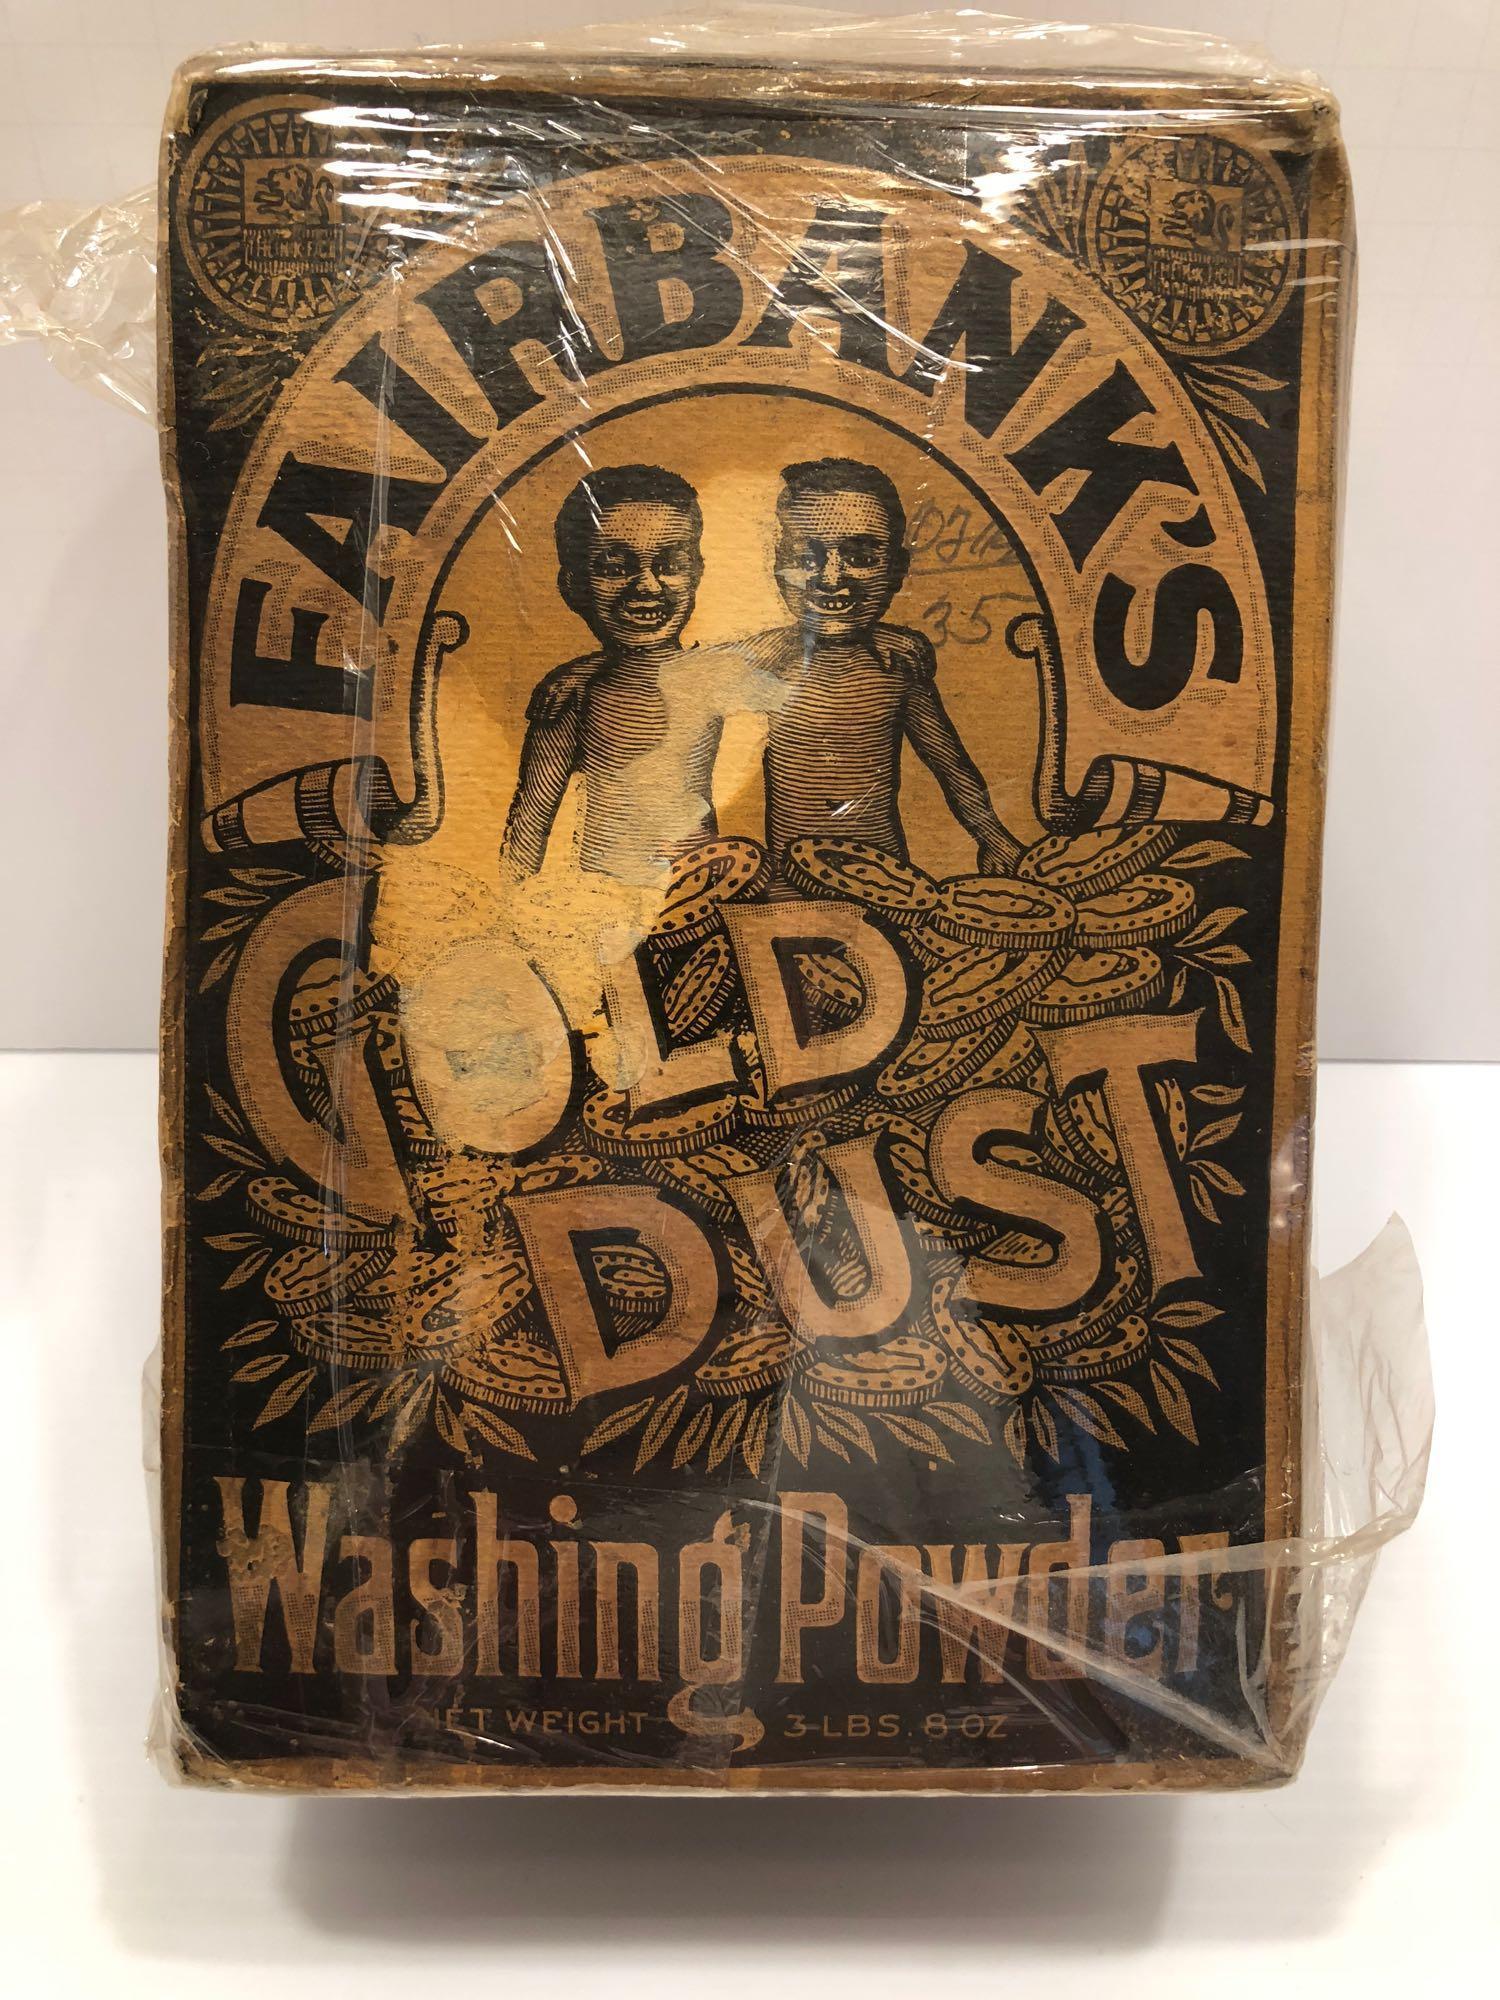 Vintage Unopened 3 lb Box FAIRBANK'S GOLD DUST Washing Powder (Black Americana)